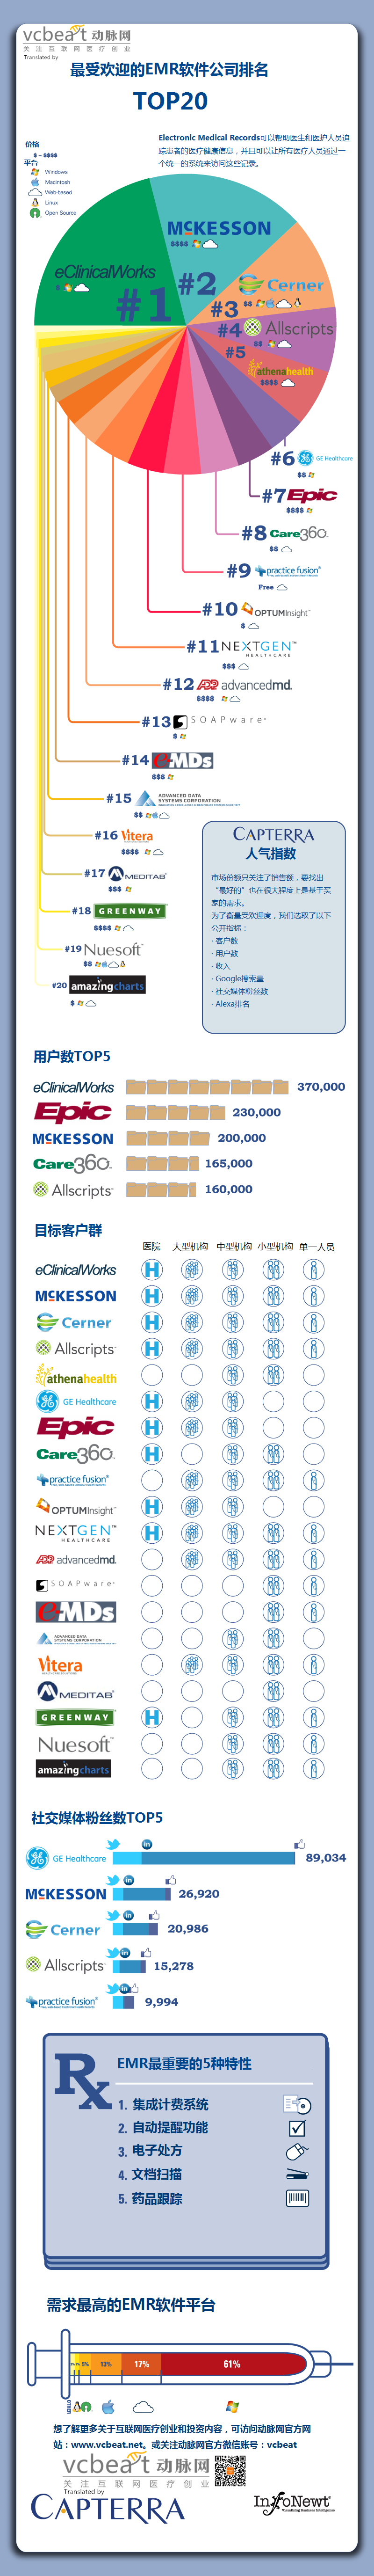 Top-20-EMR-Software-Solutions-large_副本